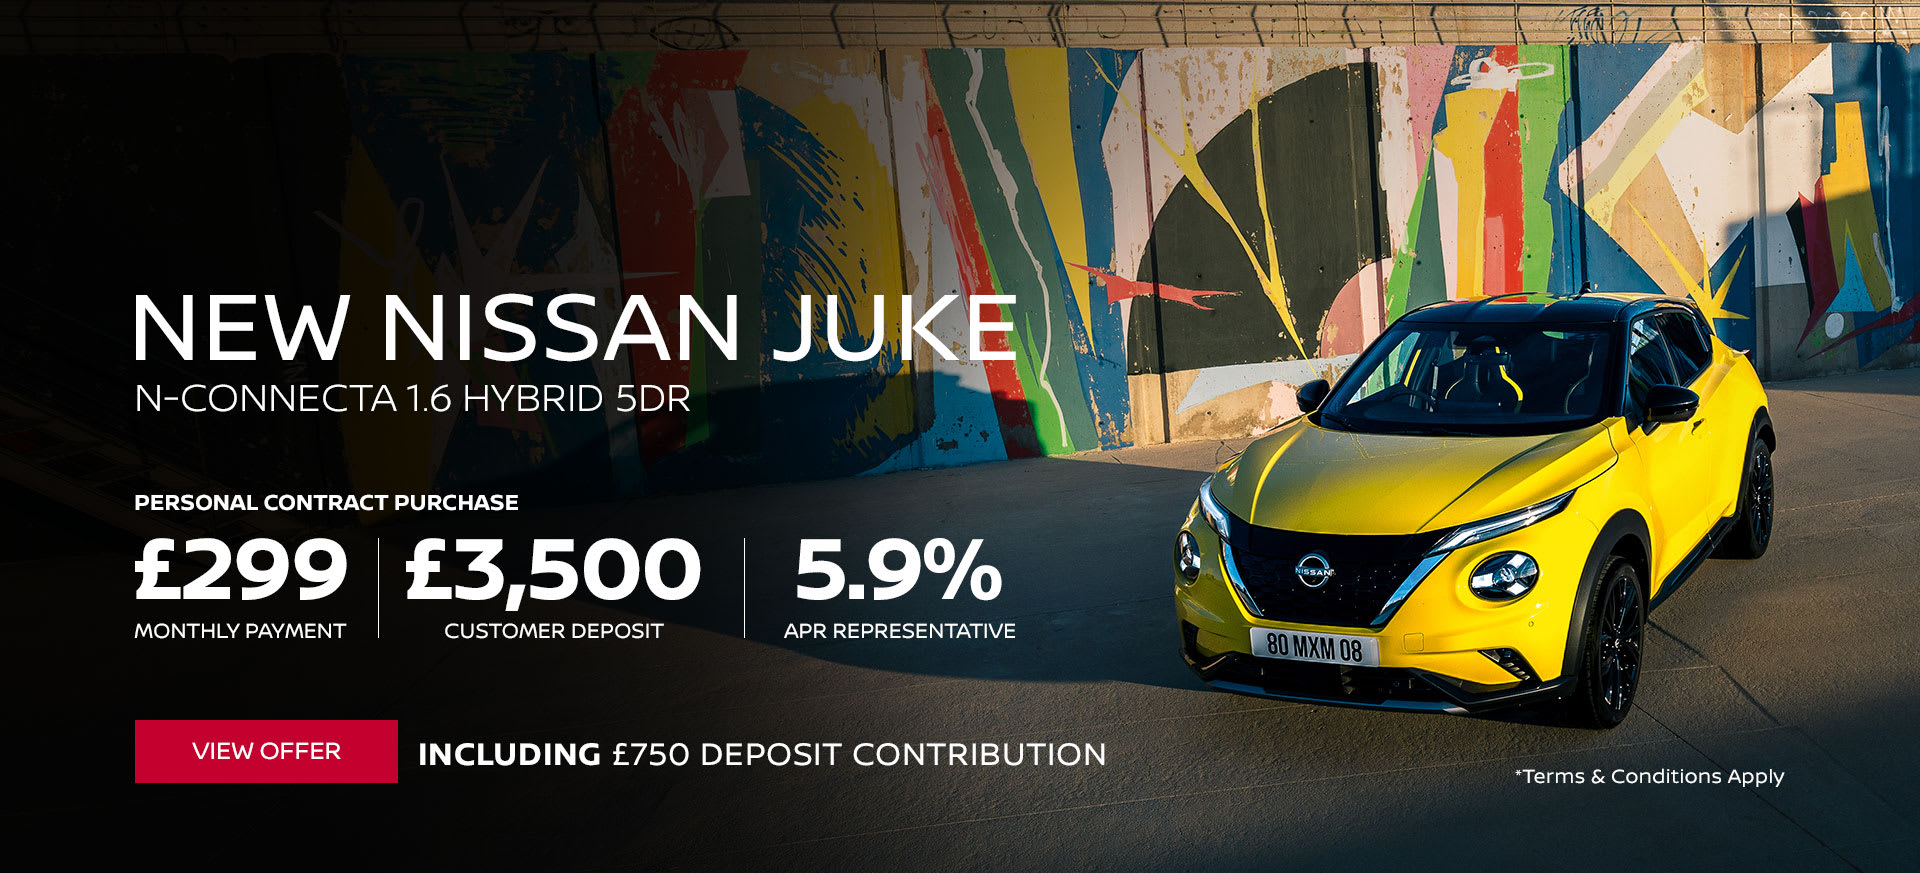 New Nissan Juke N-Connecta Hybrid 